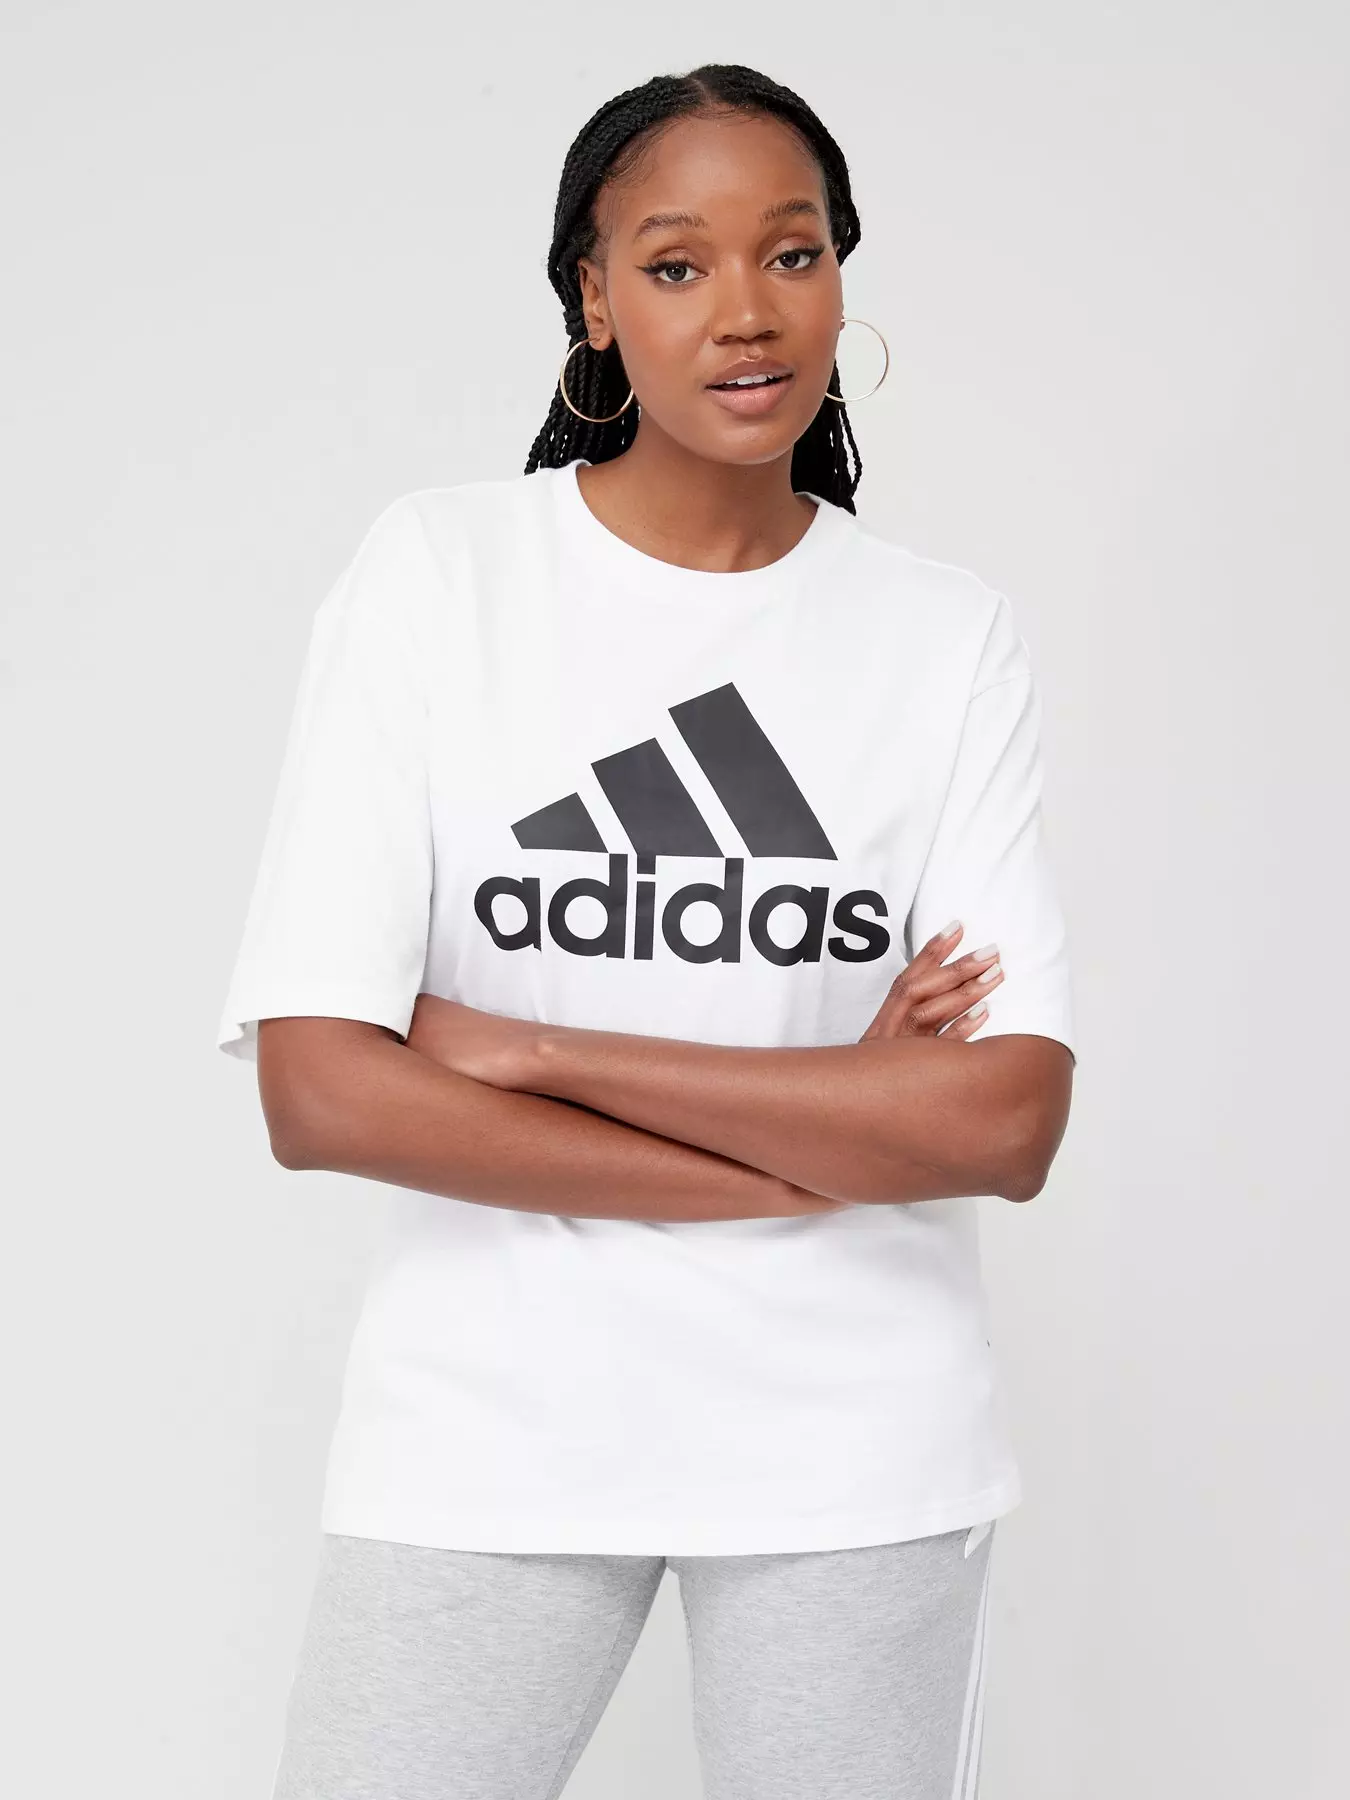 https://media.very.co.uk/i/very/V8XHY_SQ1_0000000269_WHITE_BLACK_MDf/adidas-sportswear-womens-big-logo-boyfriend-t-shirt-whiteblack.jpg?$180x240_retinamobilex2$&fmt=webp